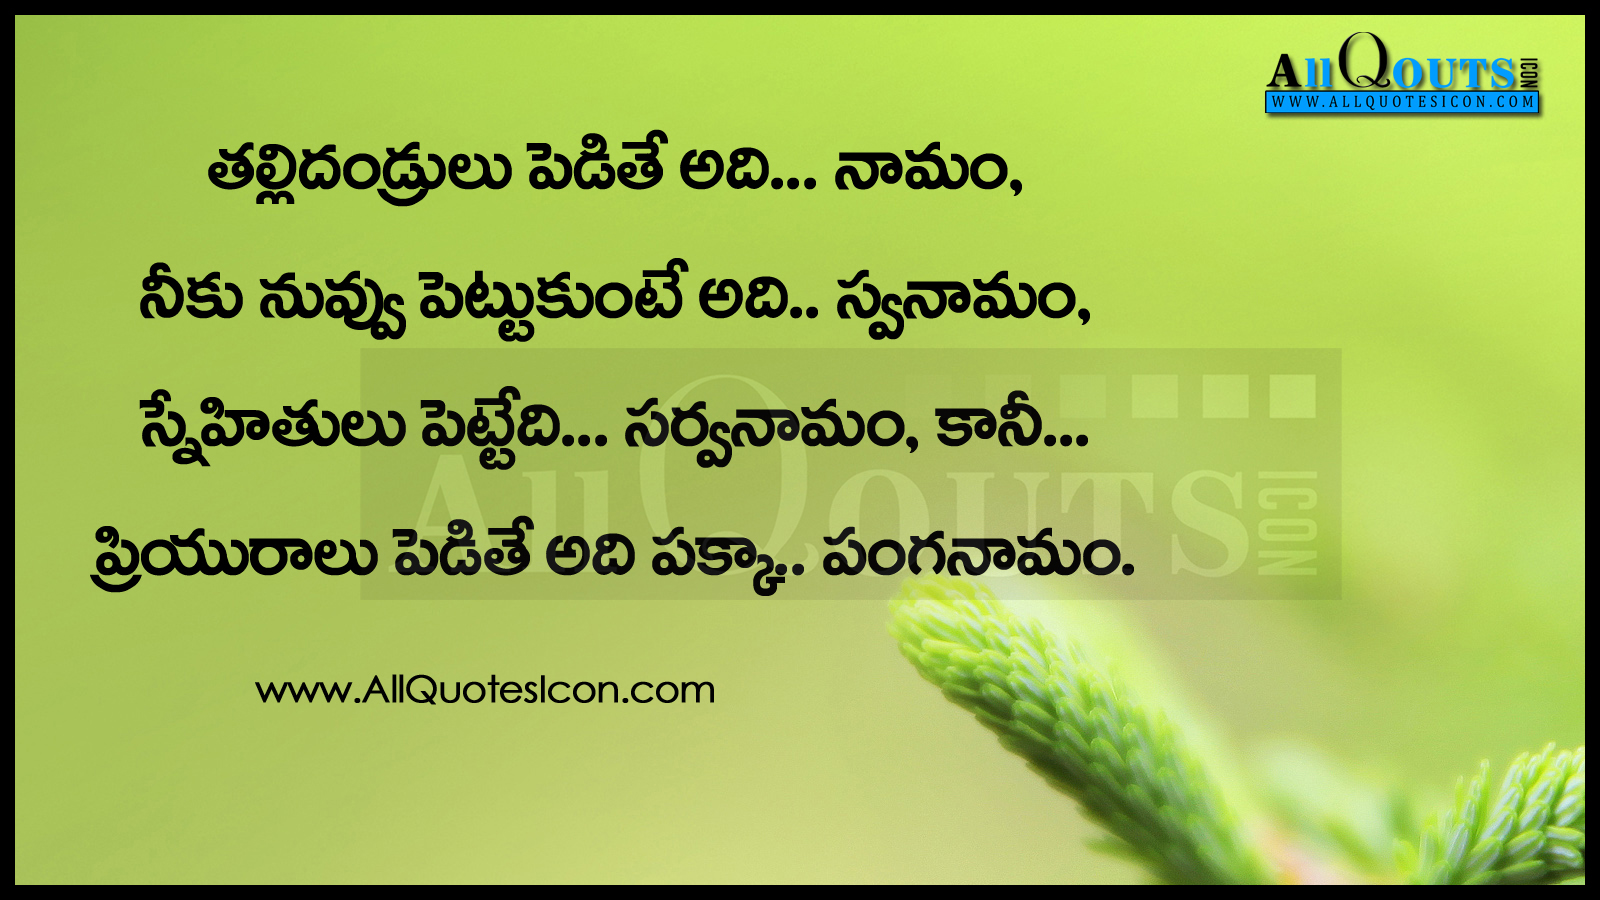 Quotes in Telugu Telugu Life Quotes Telugu Quotations Telugu â¤ Funny Quotes Love